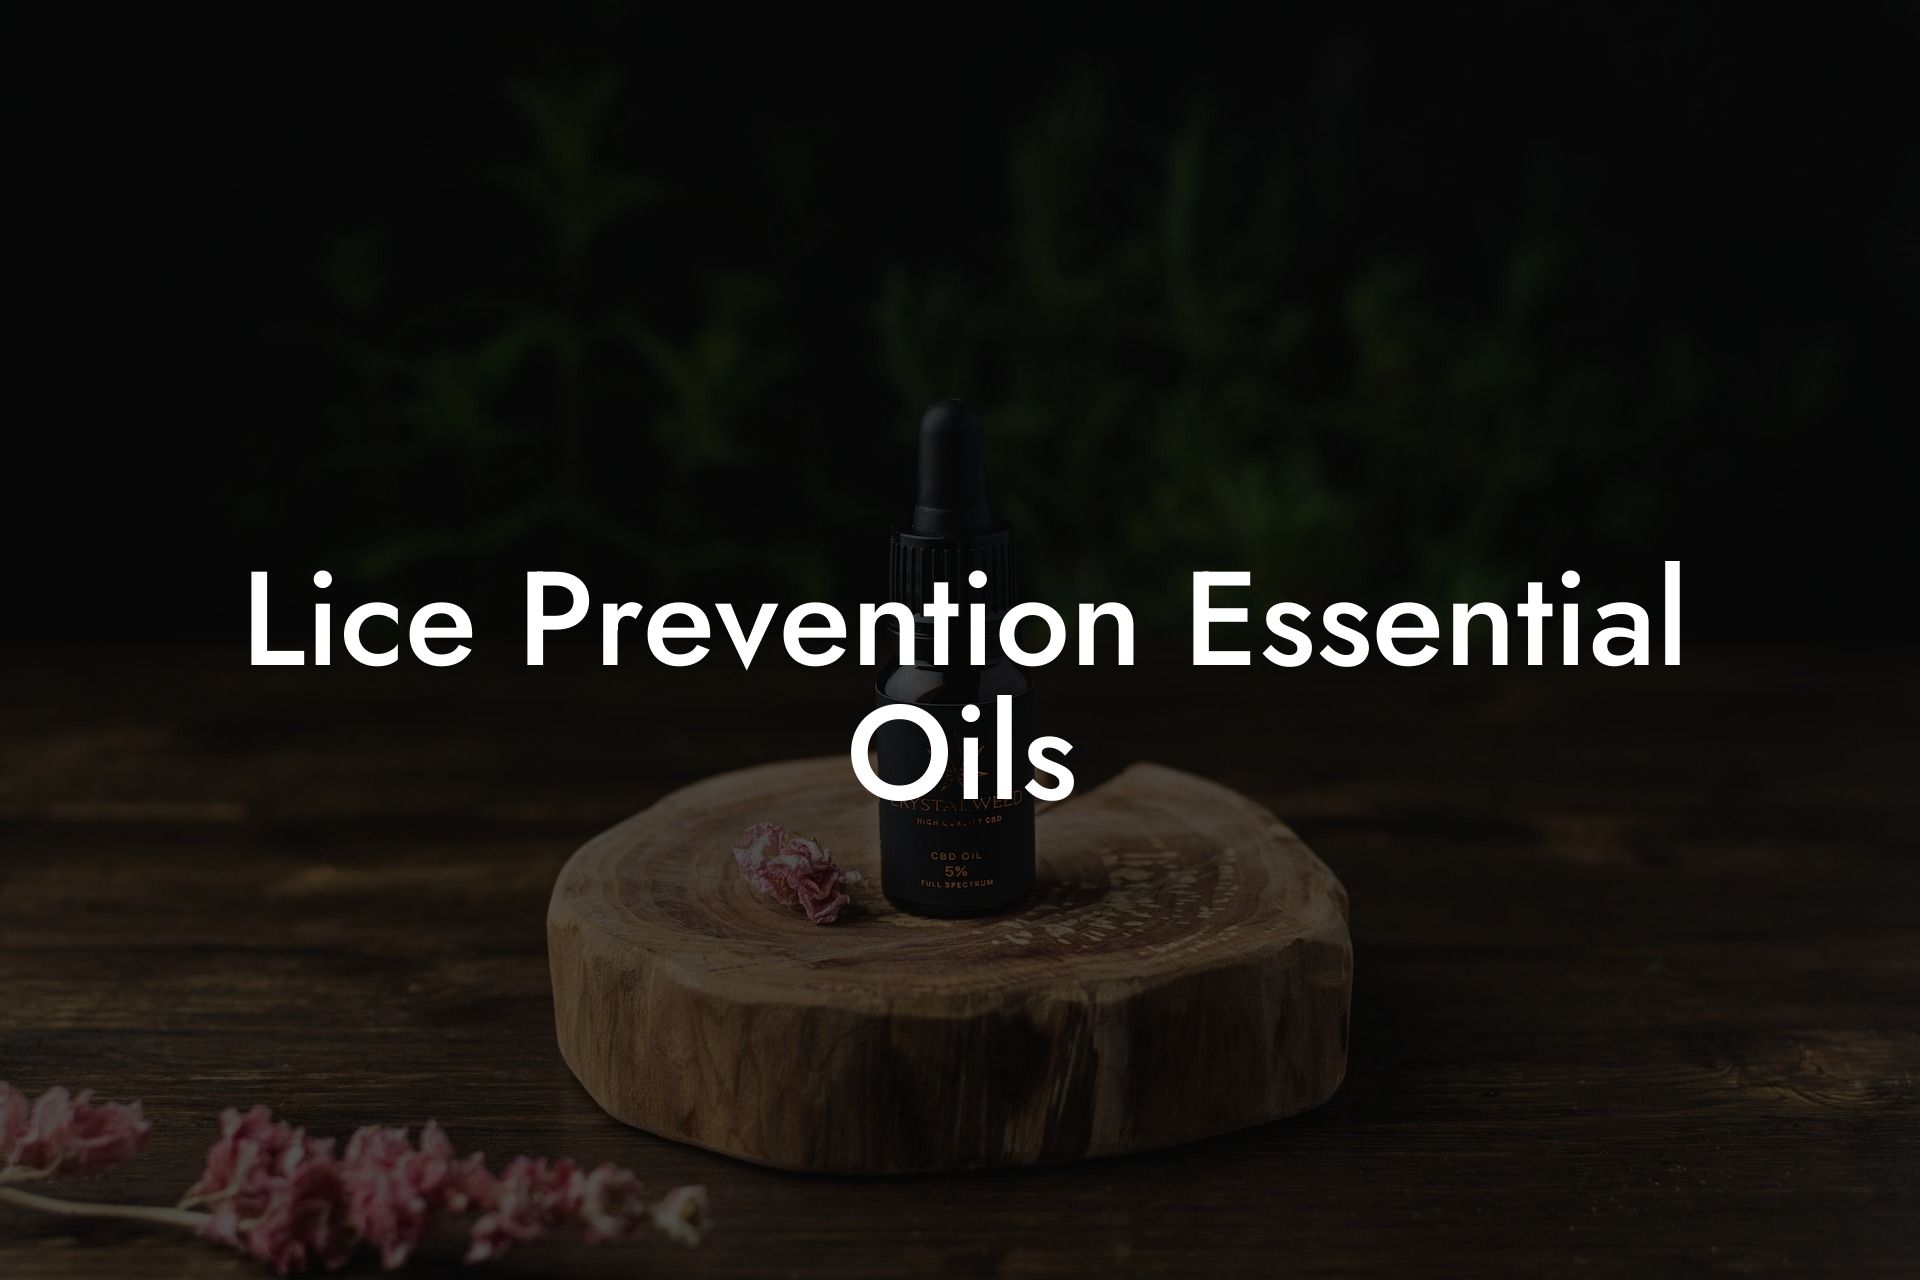 Lice Prevention Essential Oils